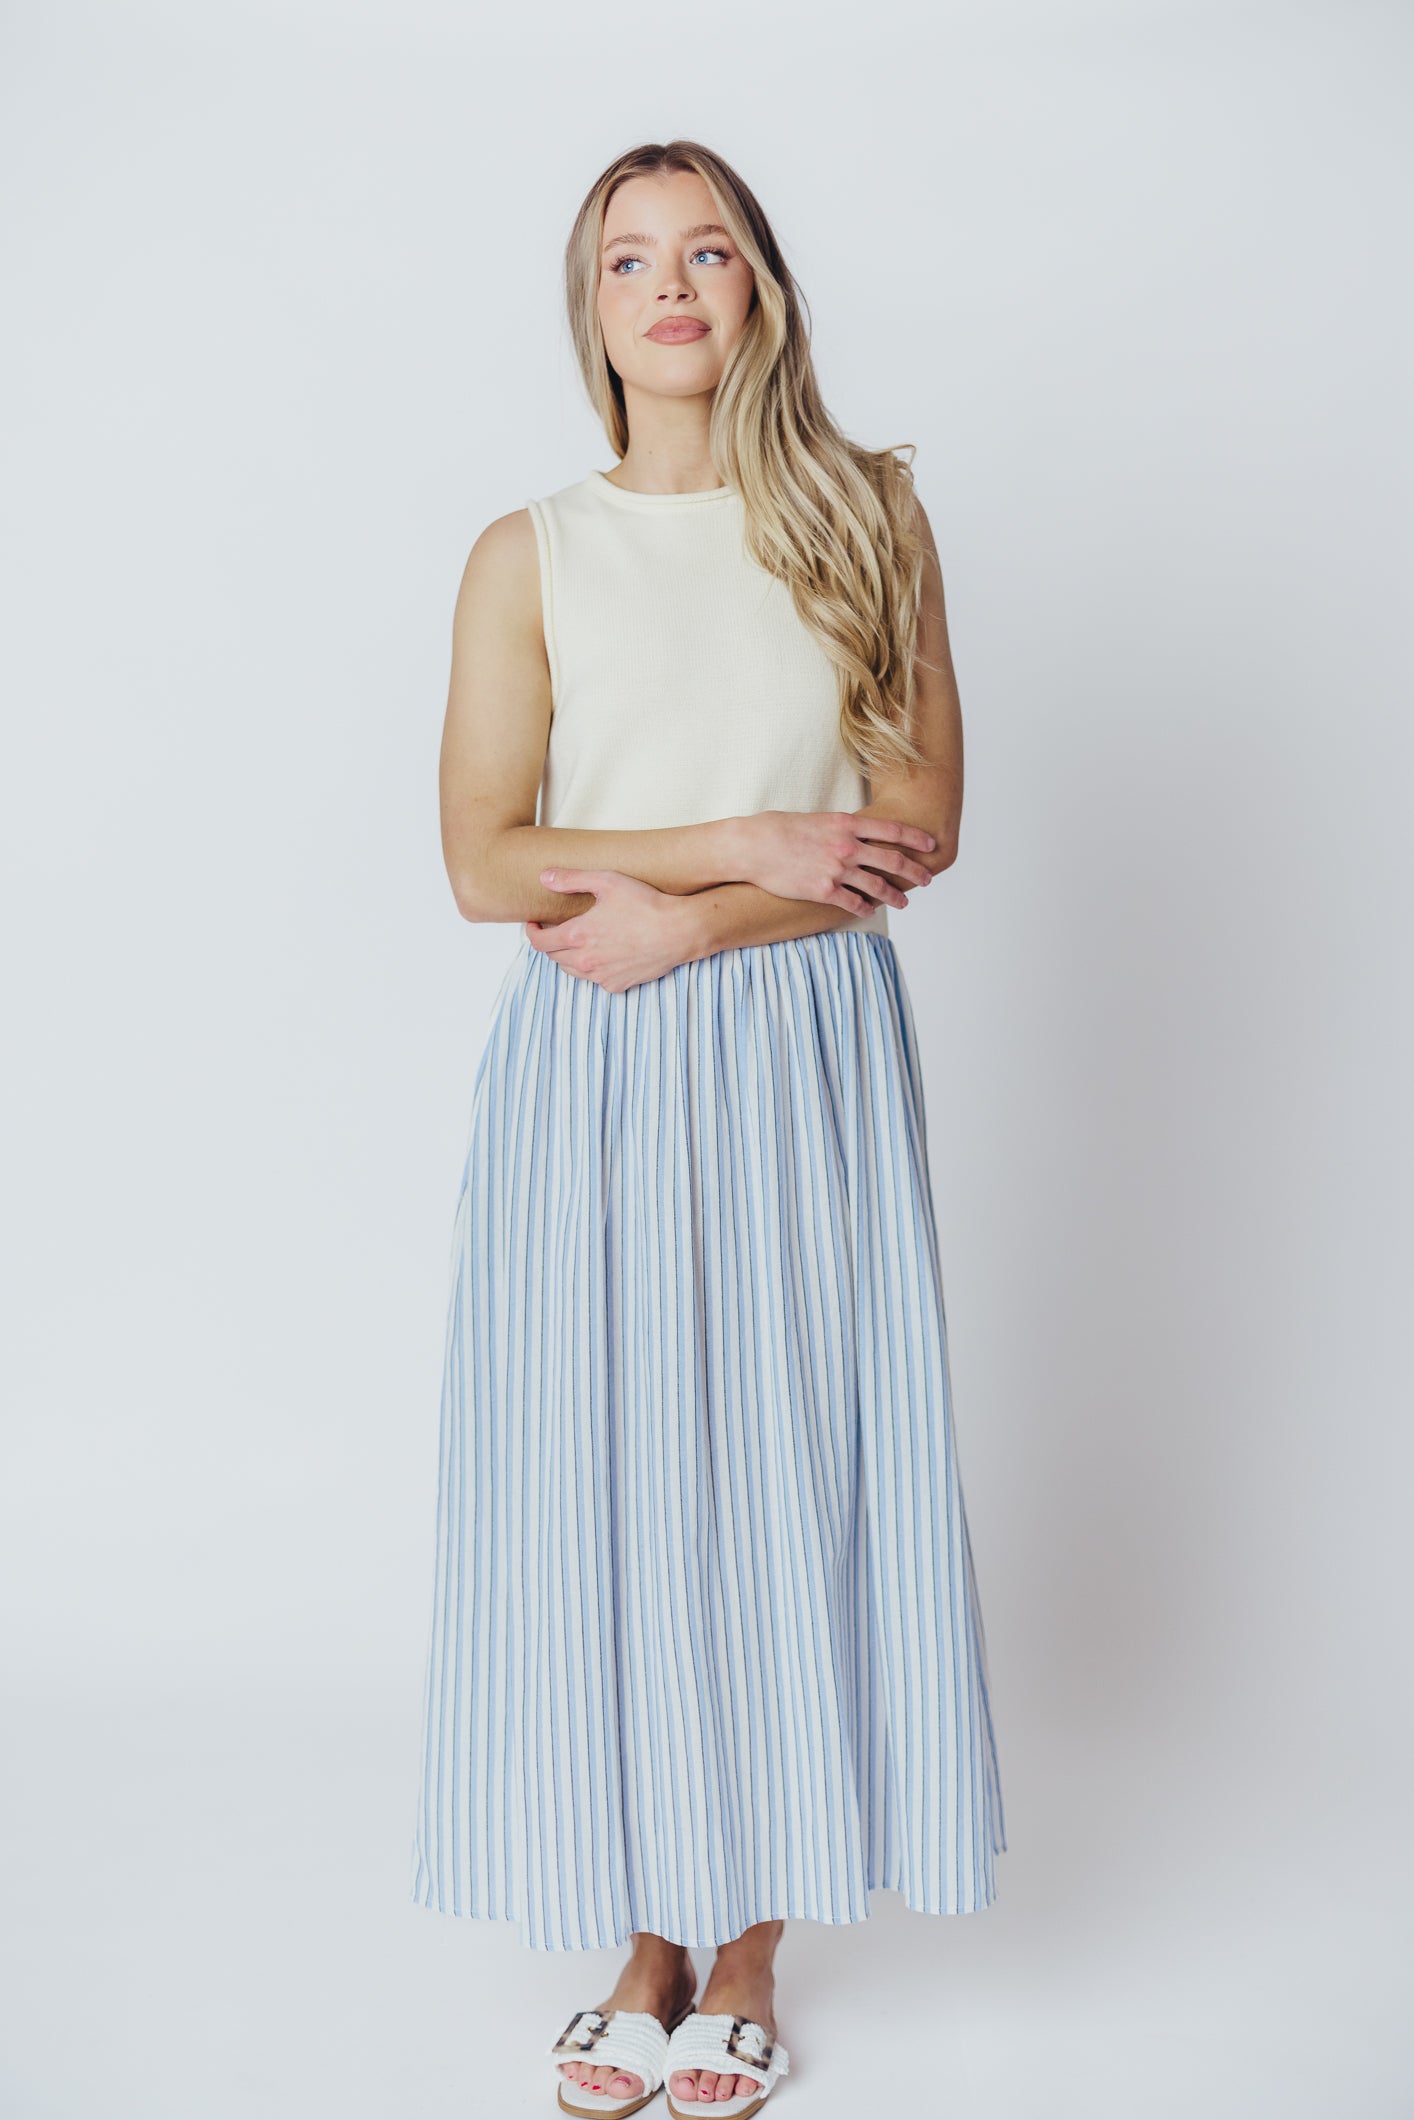 Hannah Combination Midi Dress in Ivory/Blue